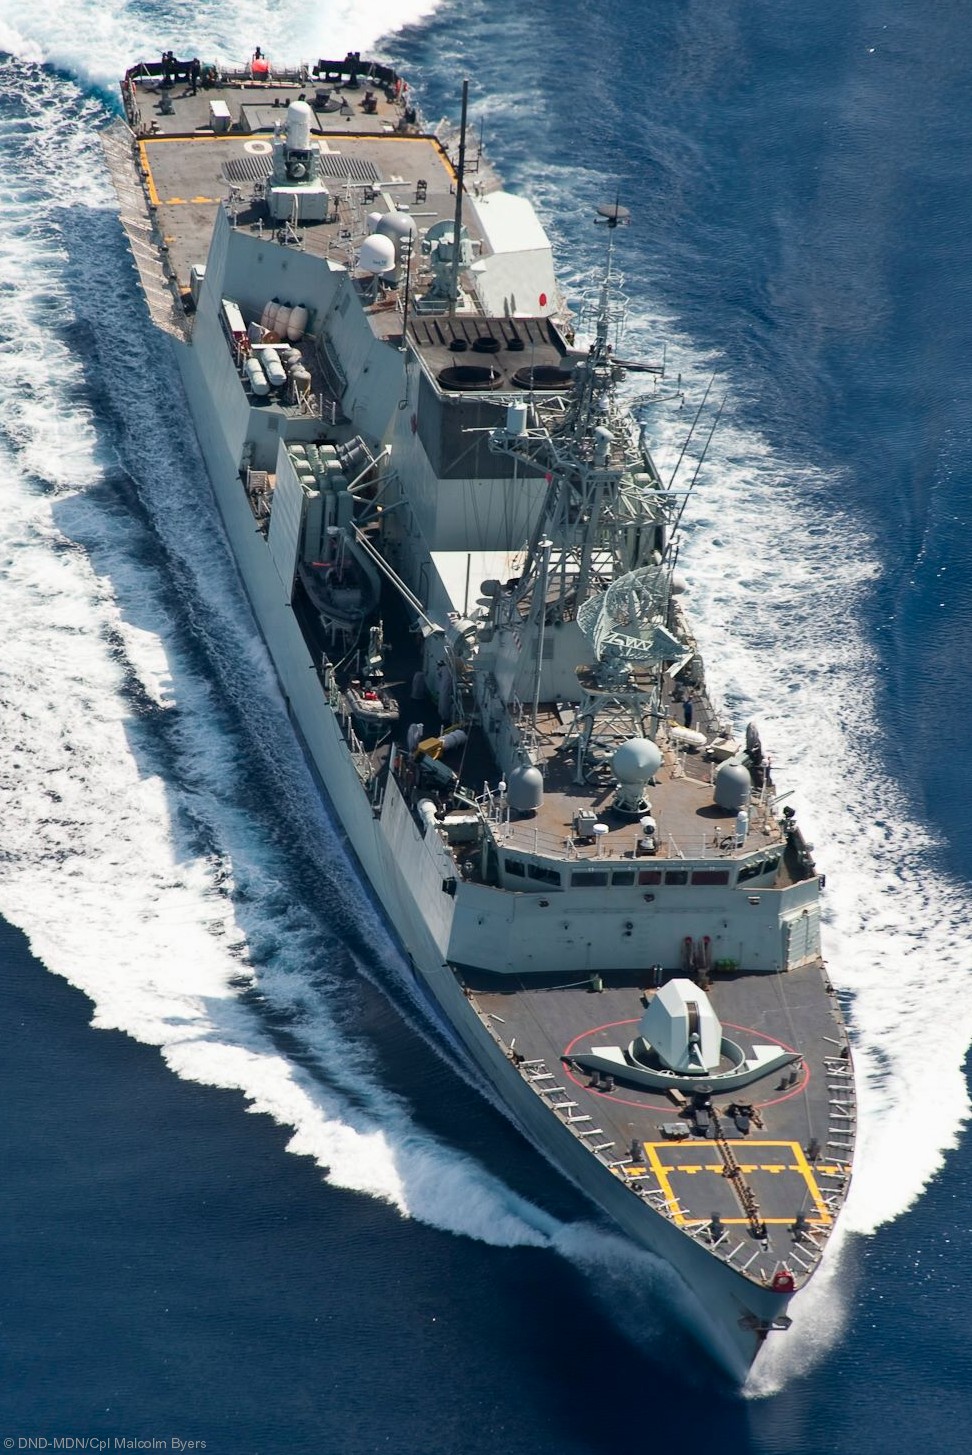 ffh-333 hmcs toronto halifax class helicopter patrol frigate ncsm royal canadian navy 21